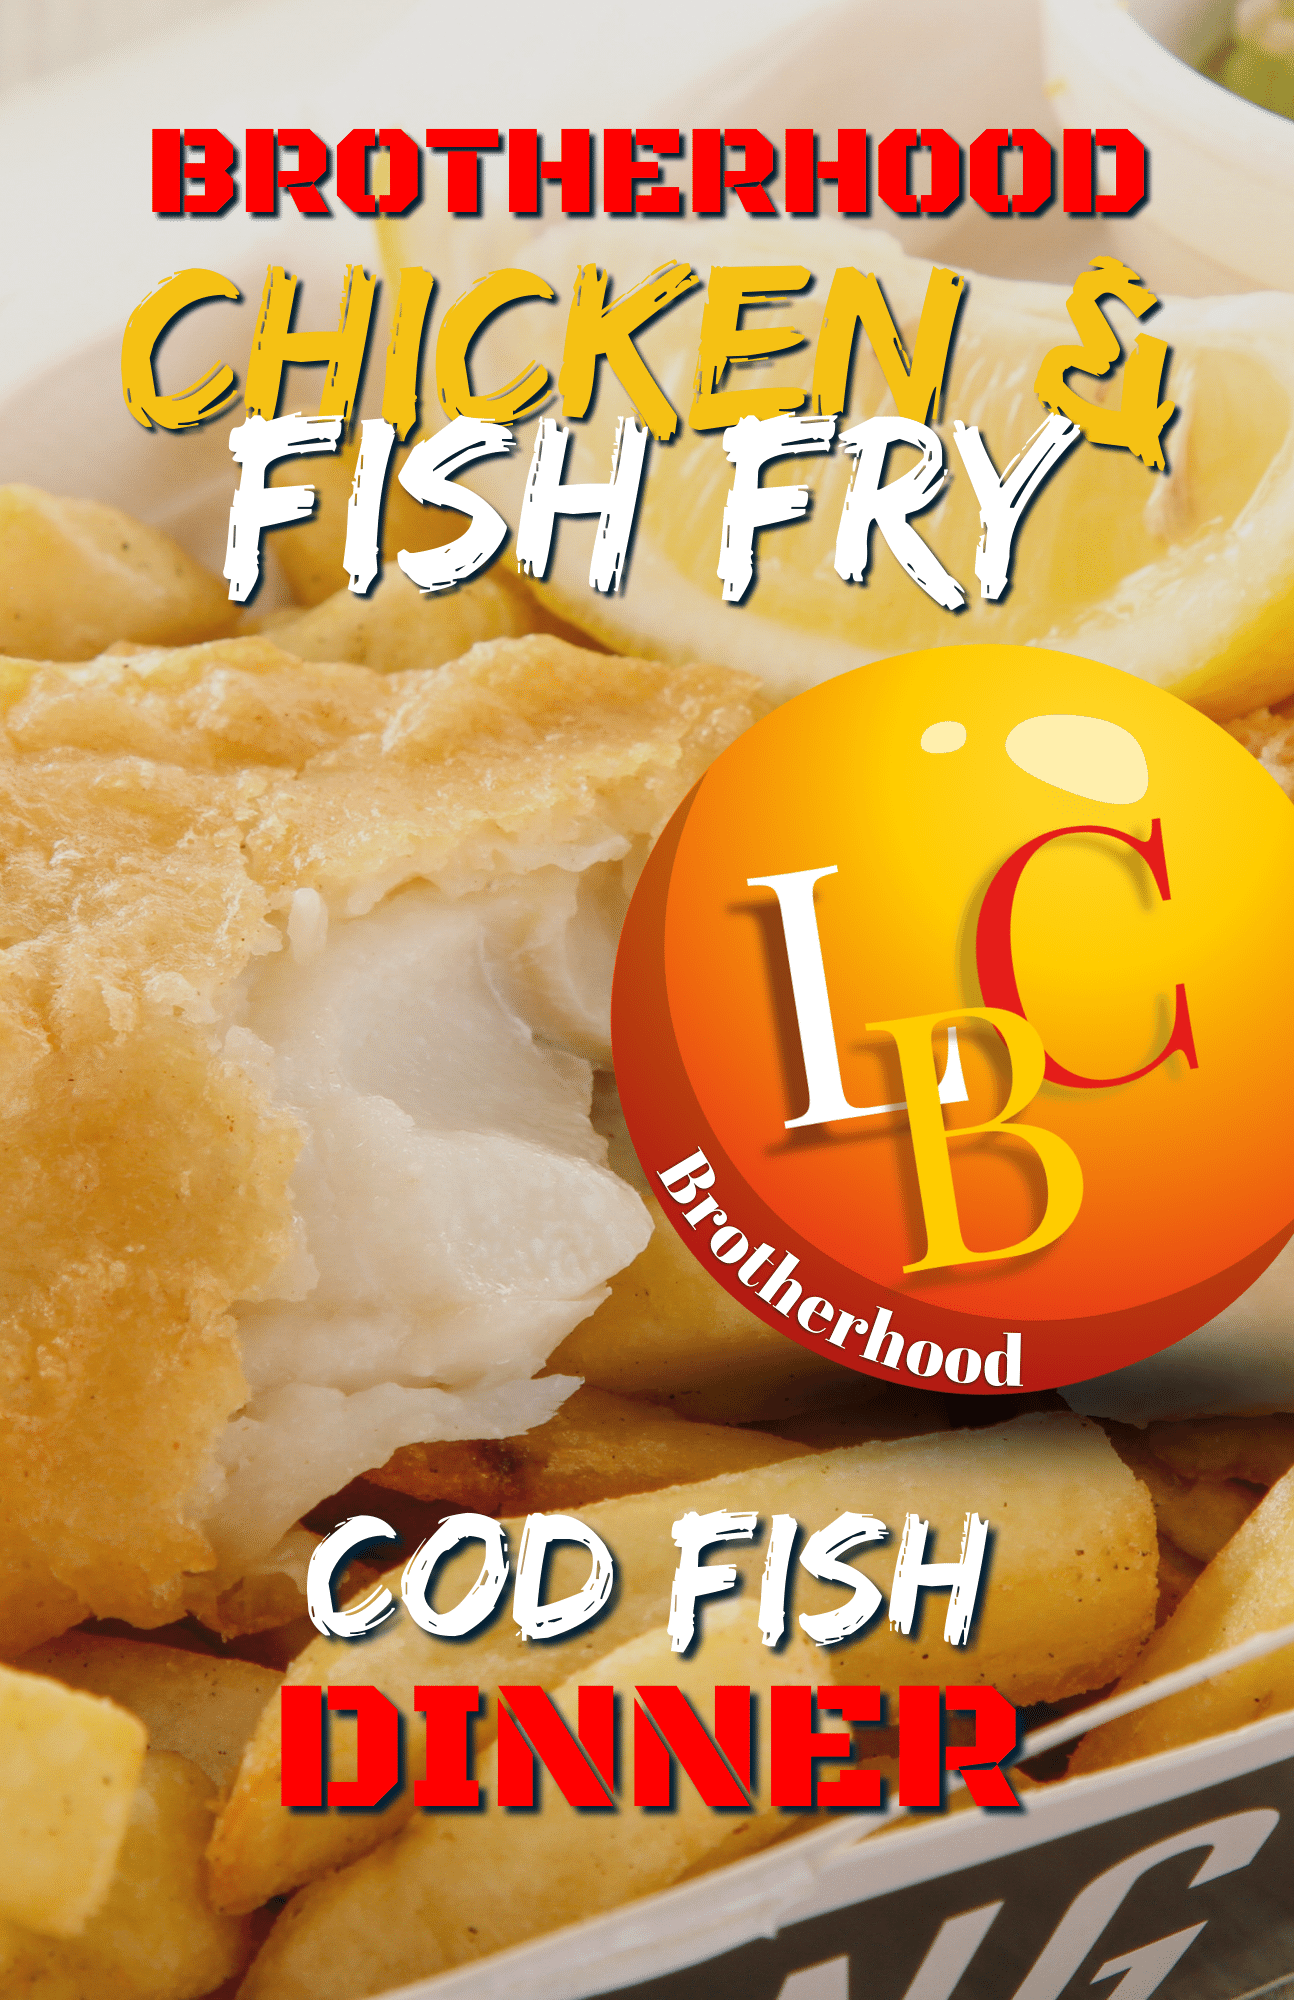 FishFry_CodFish_Product Image.png